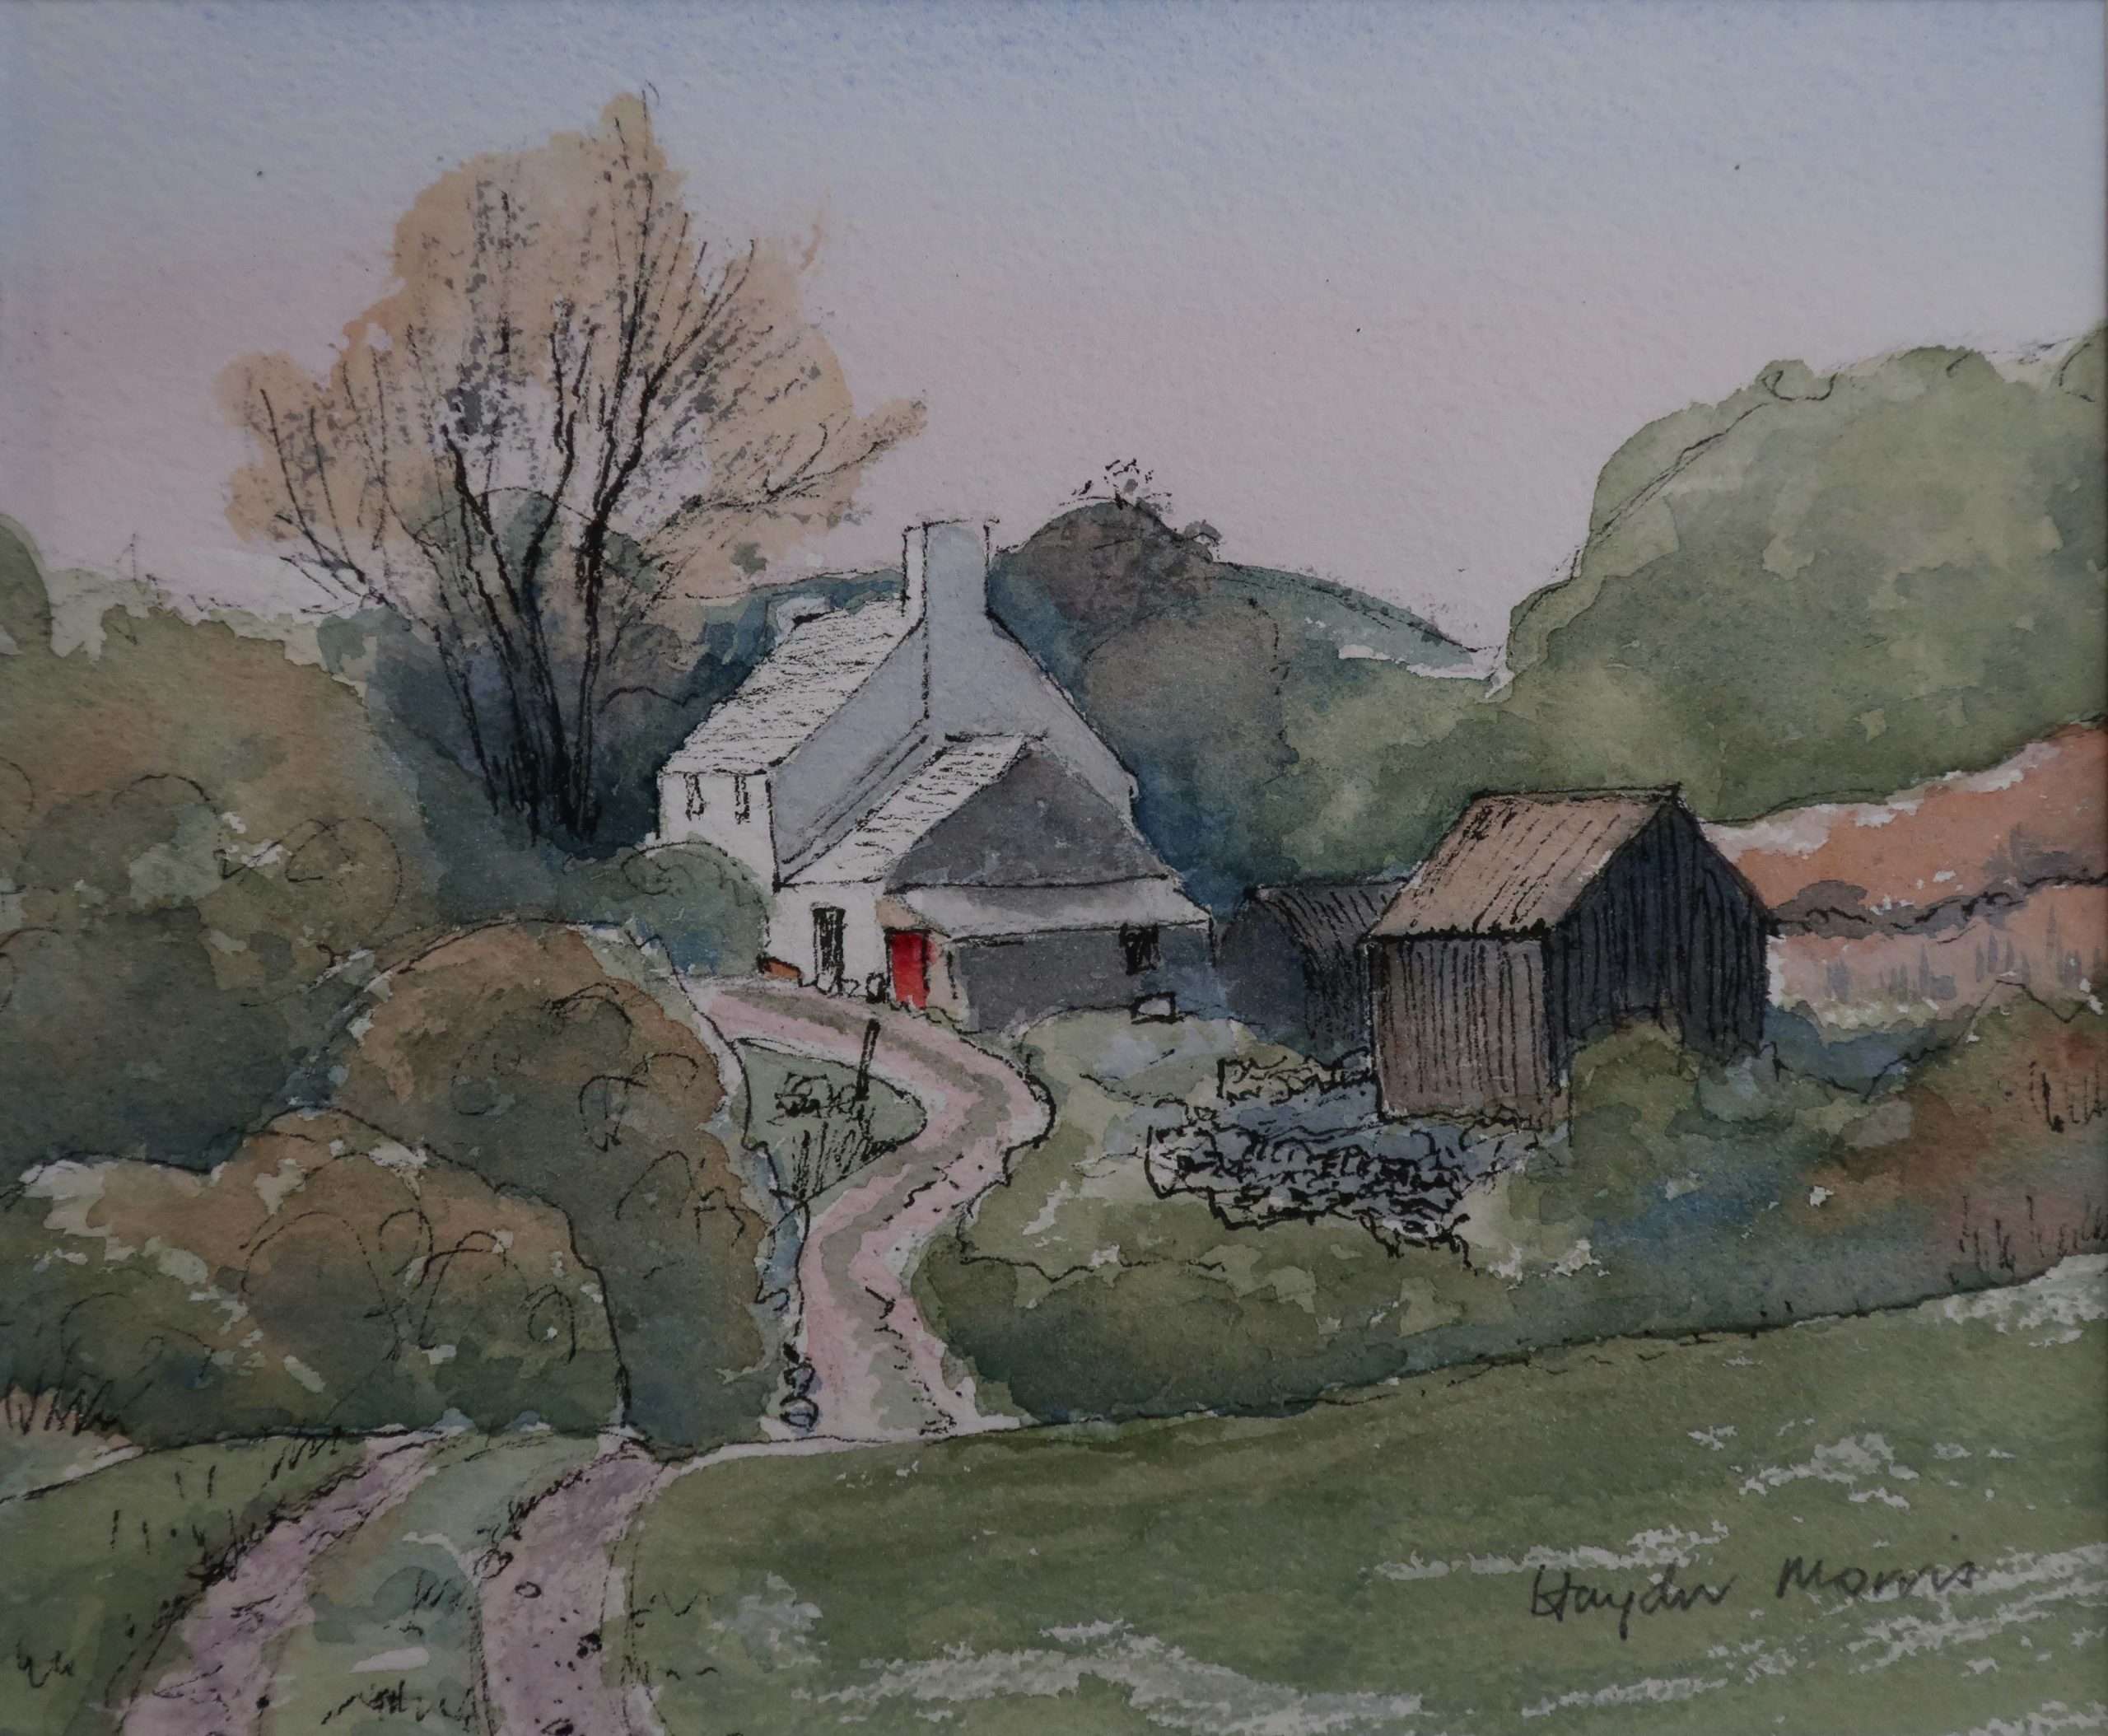 Near-Croesor-Snowdonia-watercolour-ink-16x19cm Sold